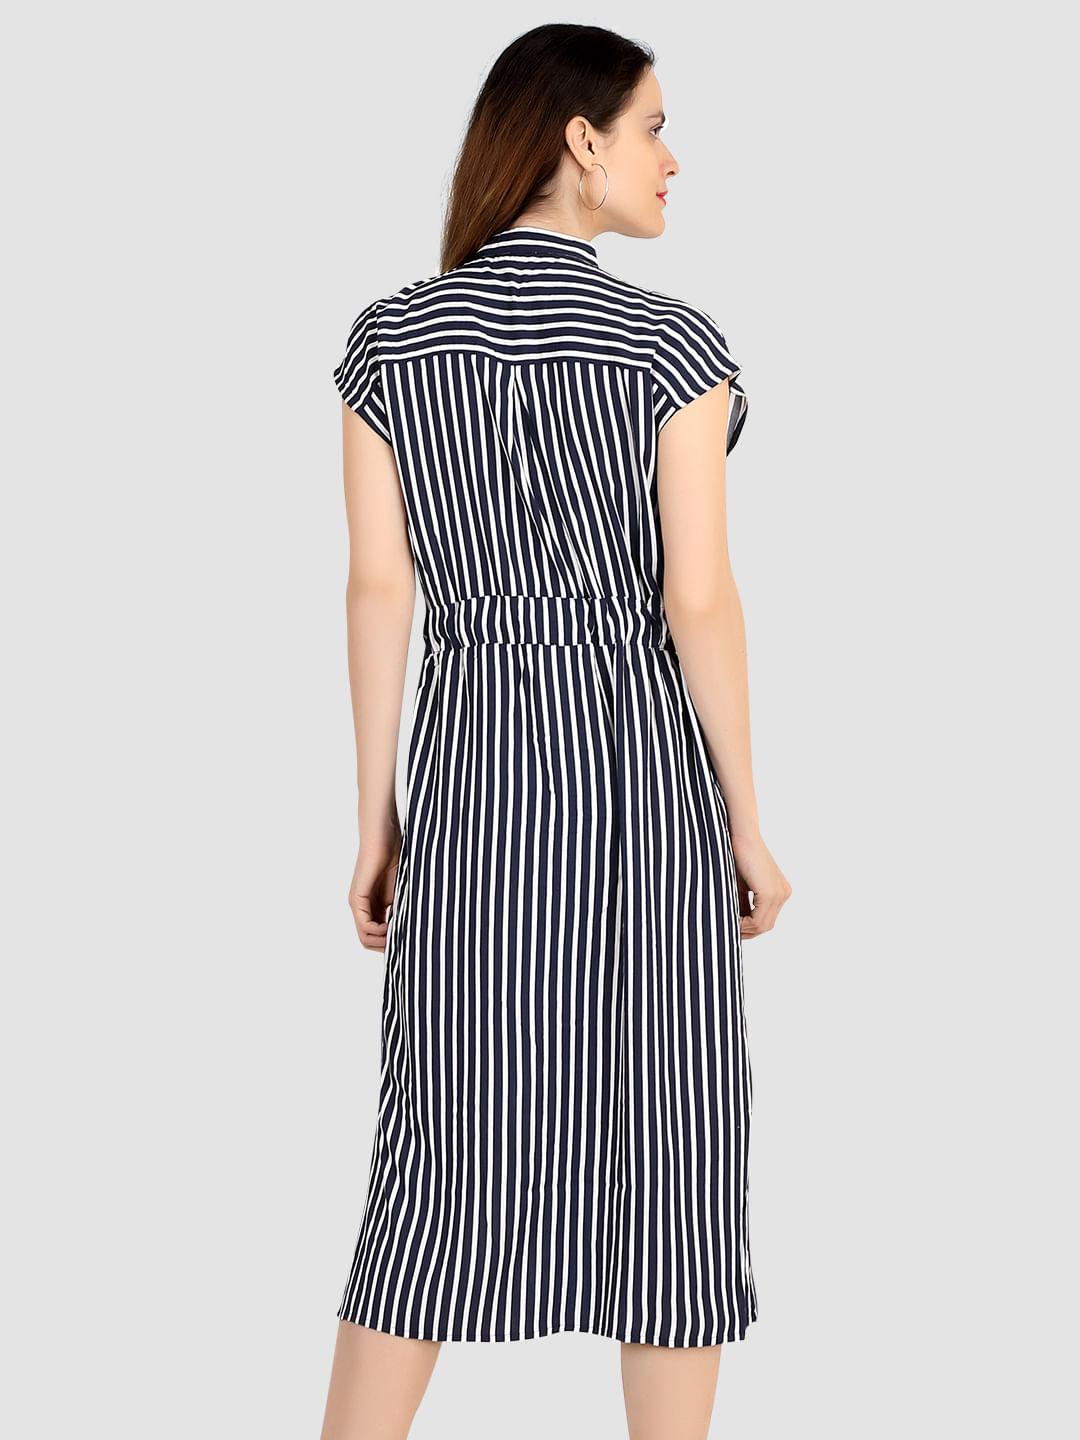 Buy LATIN QUARTERS Womens Striped Shirt Dress | Shoppers Stop